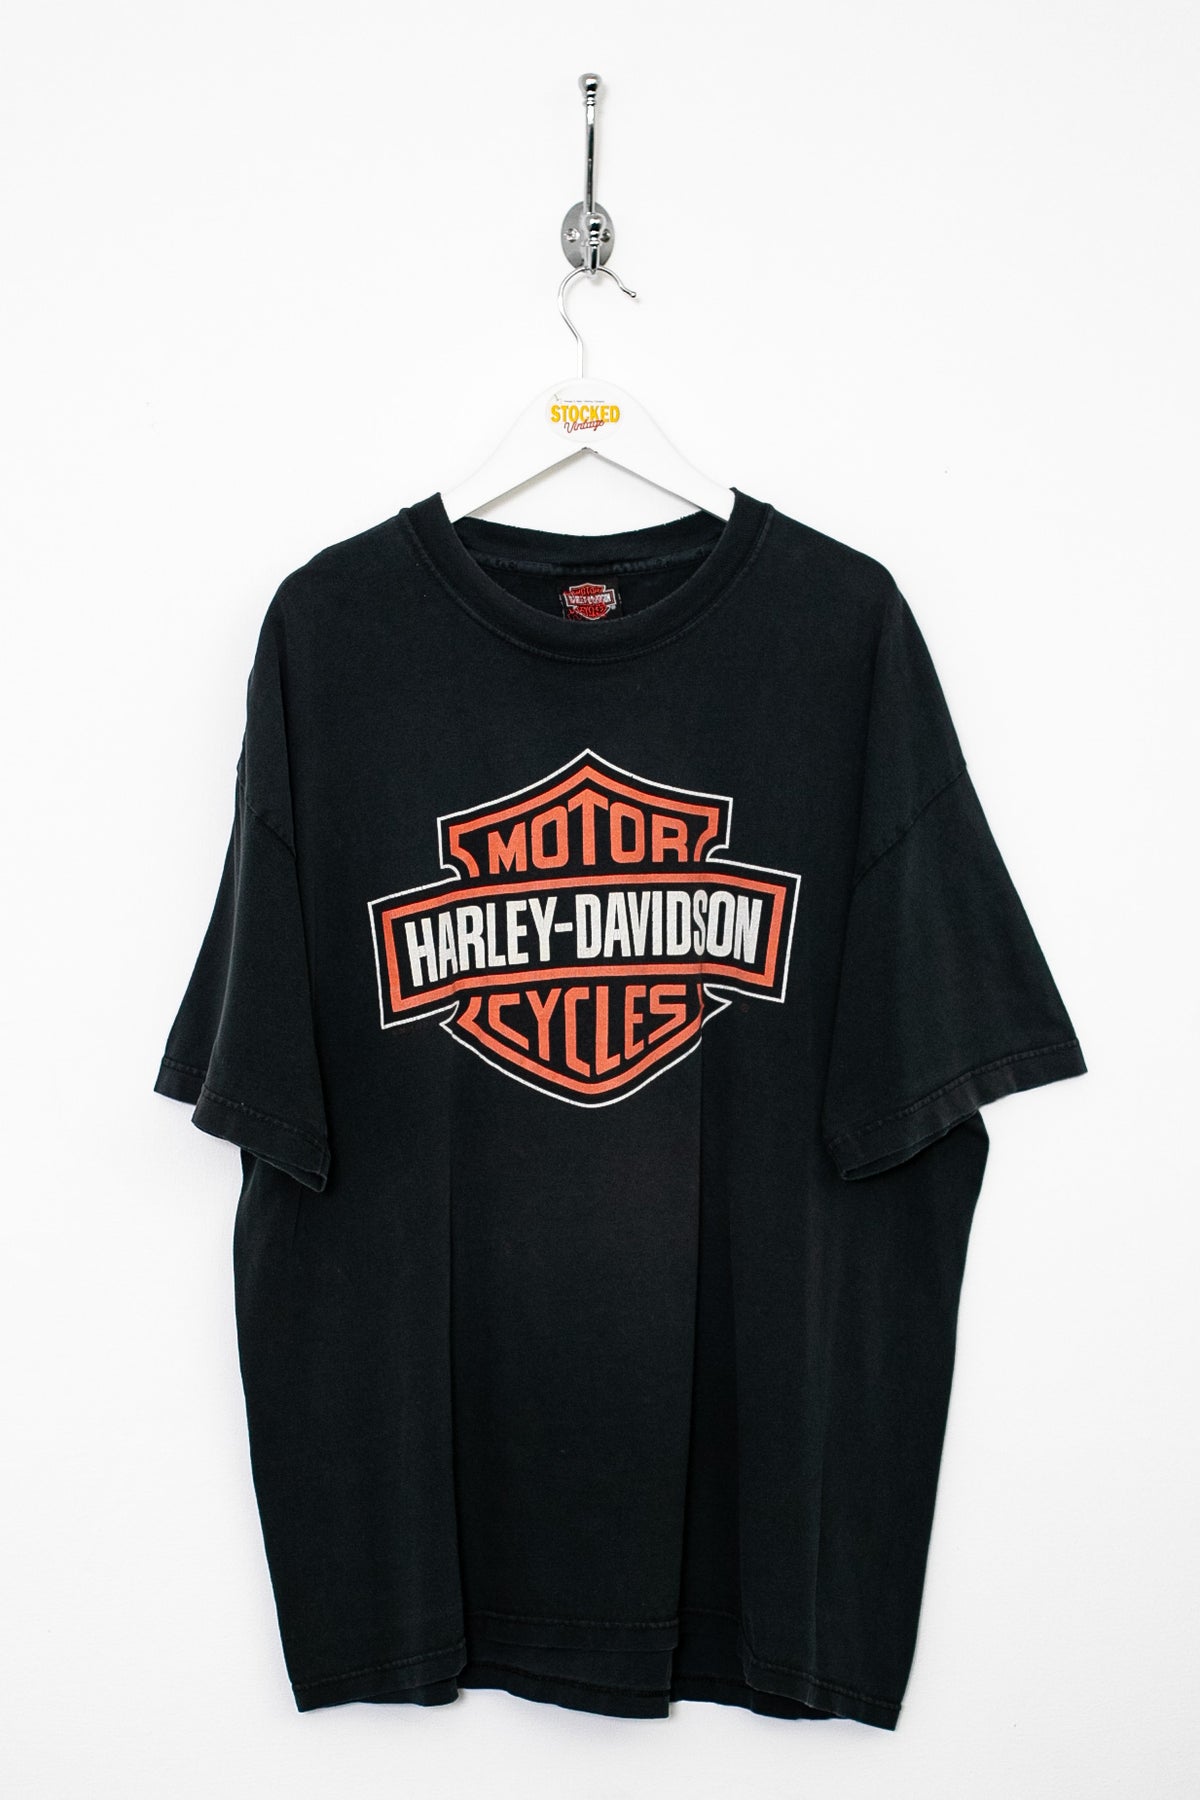 00s Harley Davidson Graphic Tee (XL)